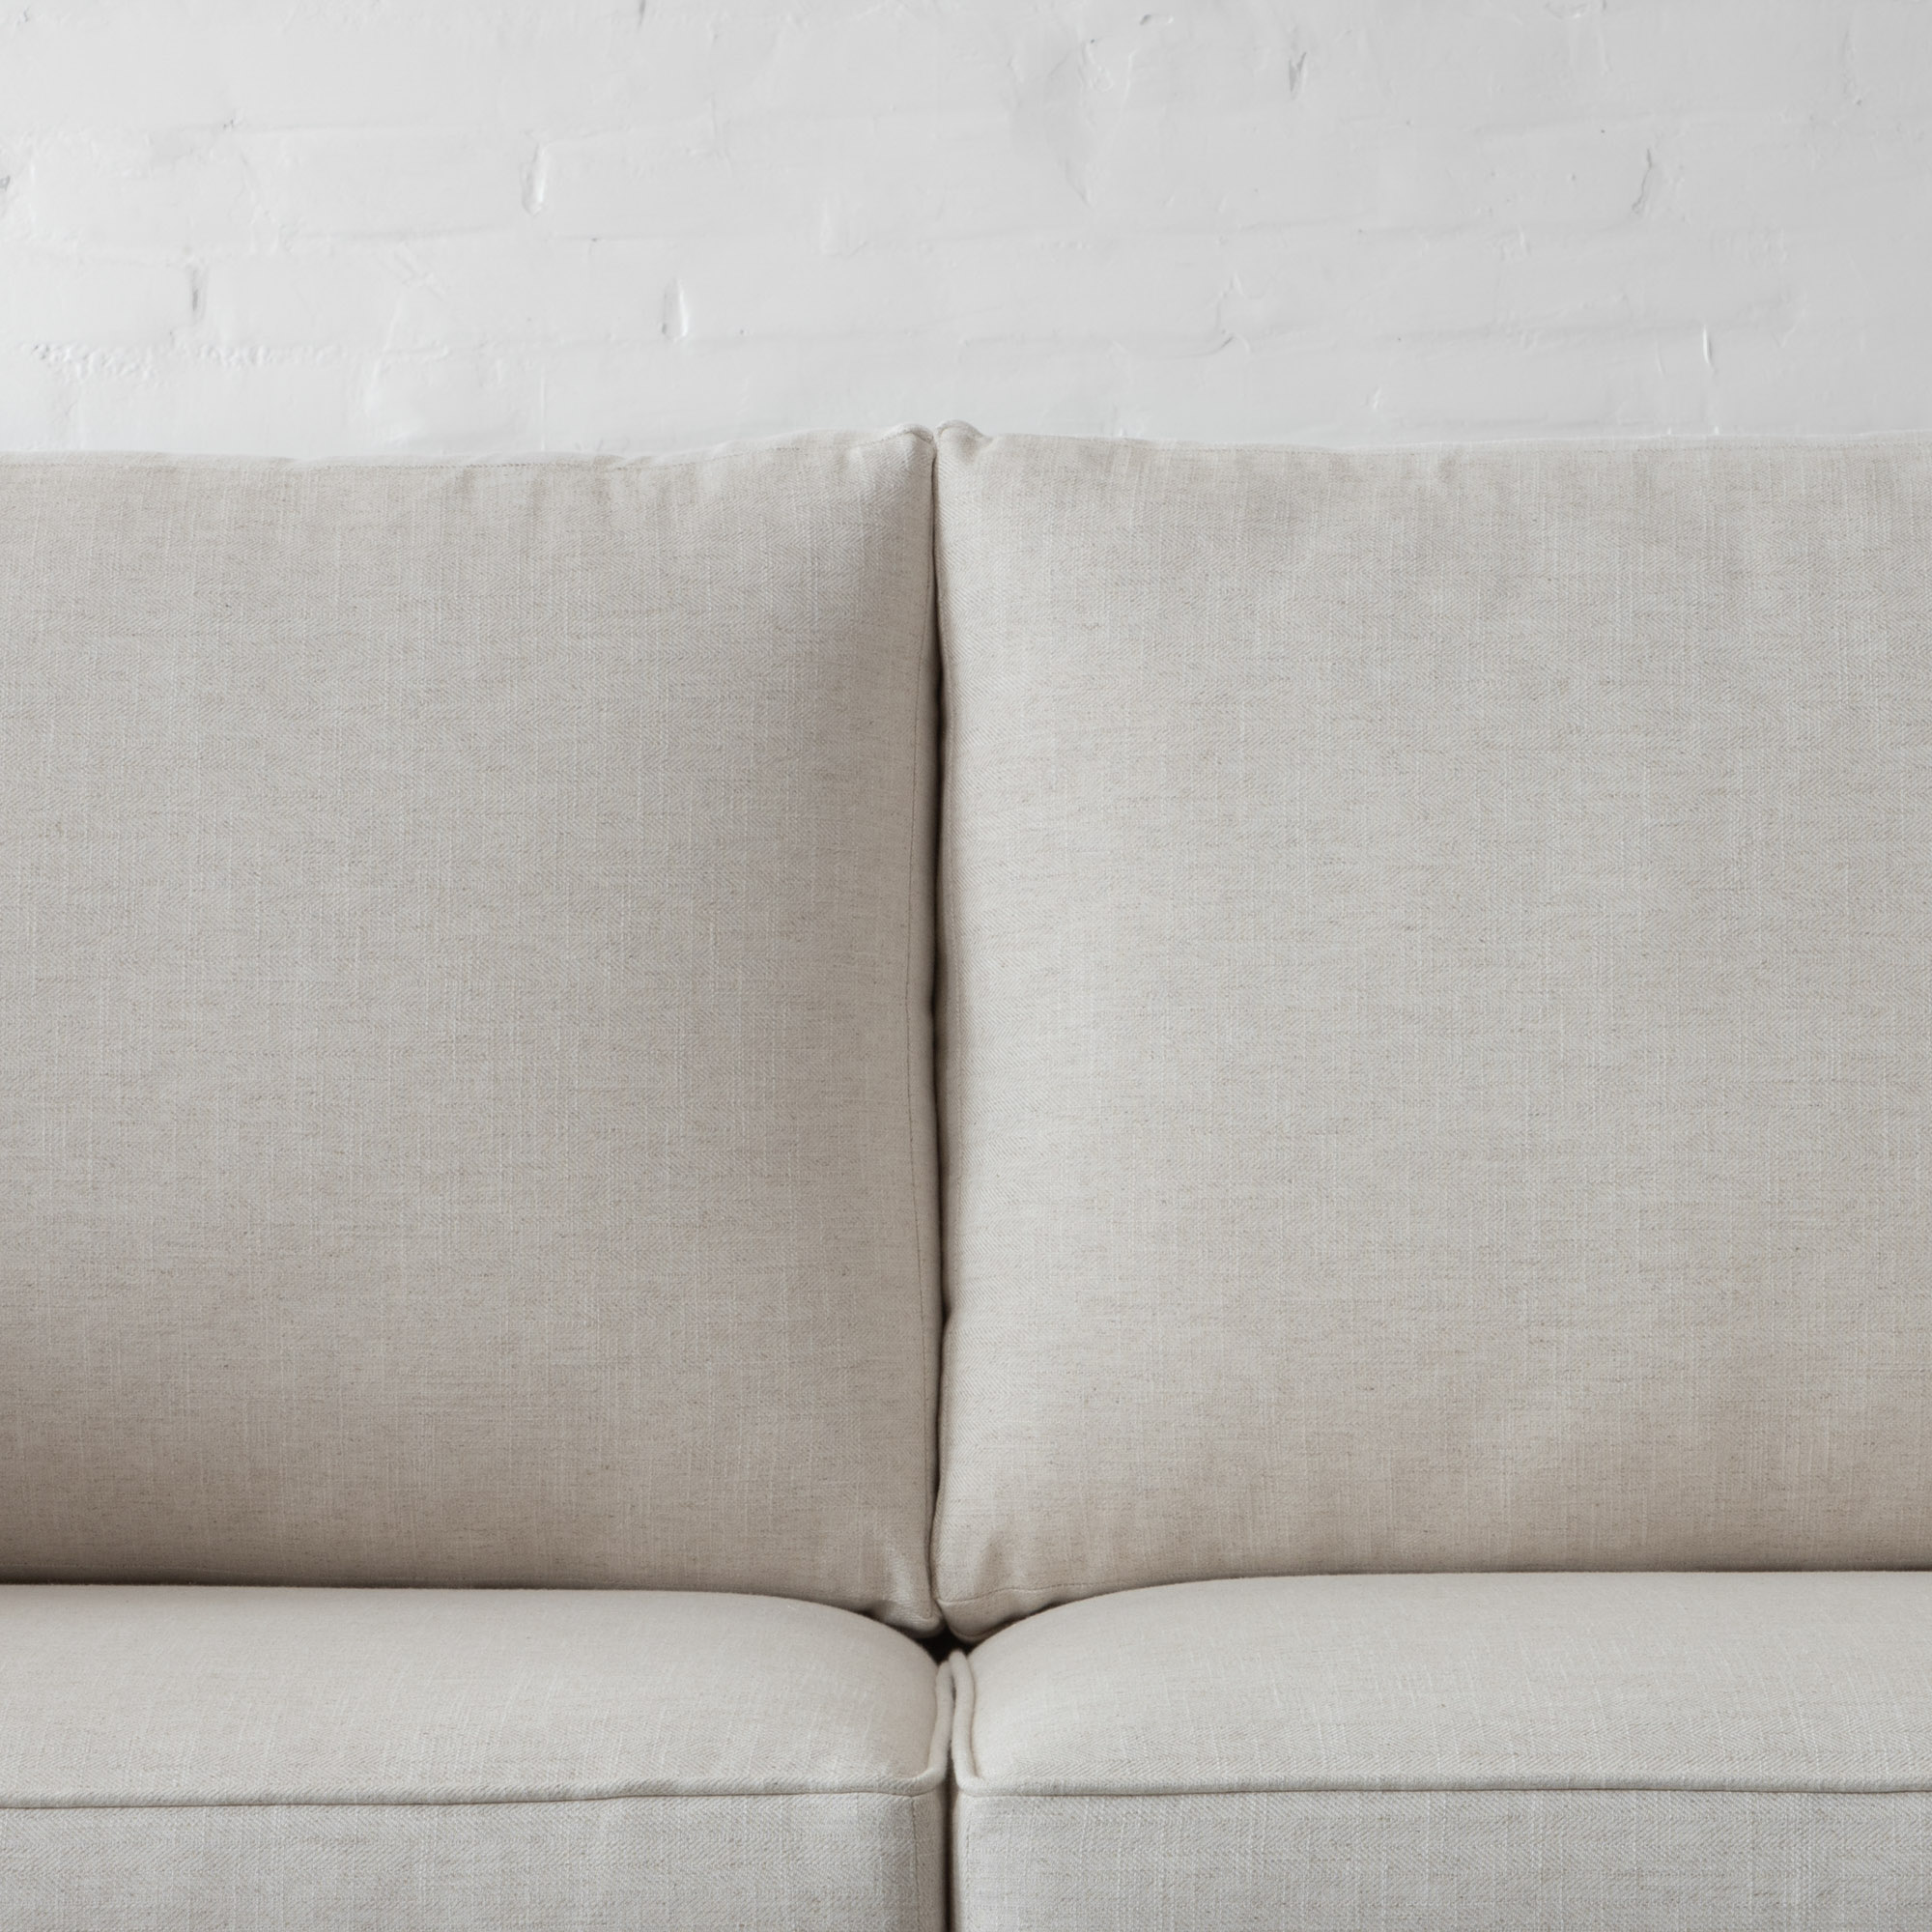 Wellington Slipcover Sofa Collection